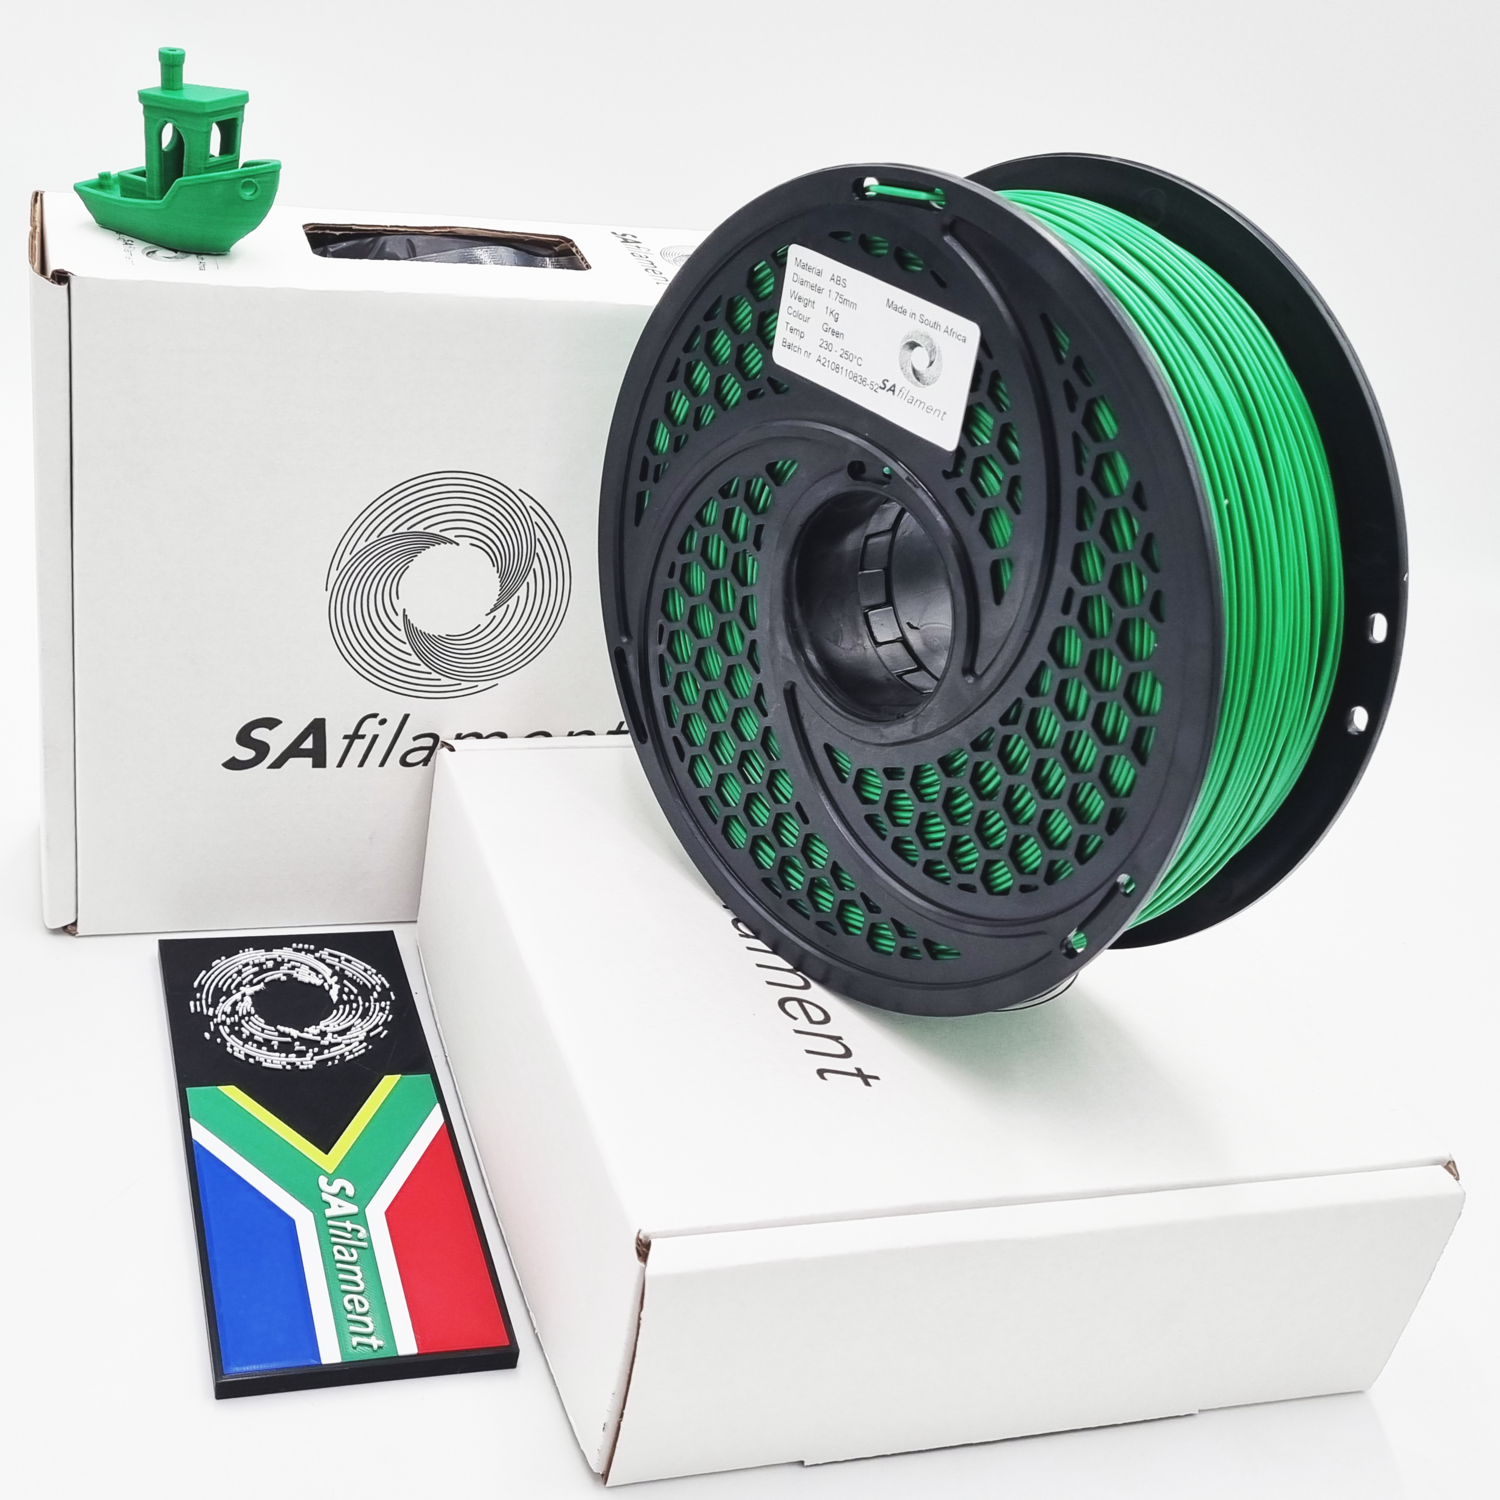 Green ABS Filament, 1Kg, 1.75mm by SA Filament